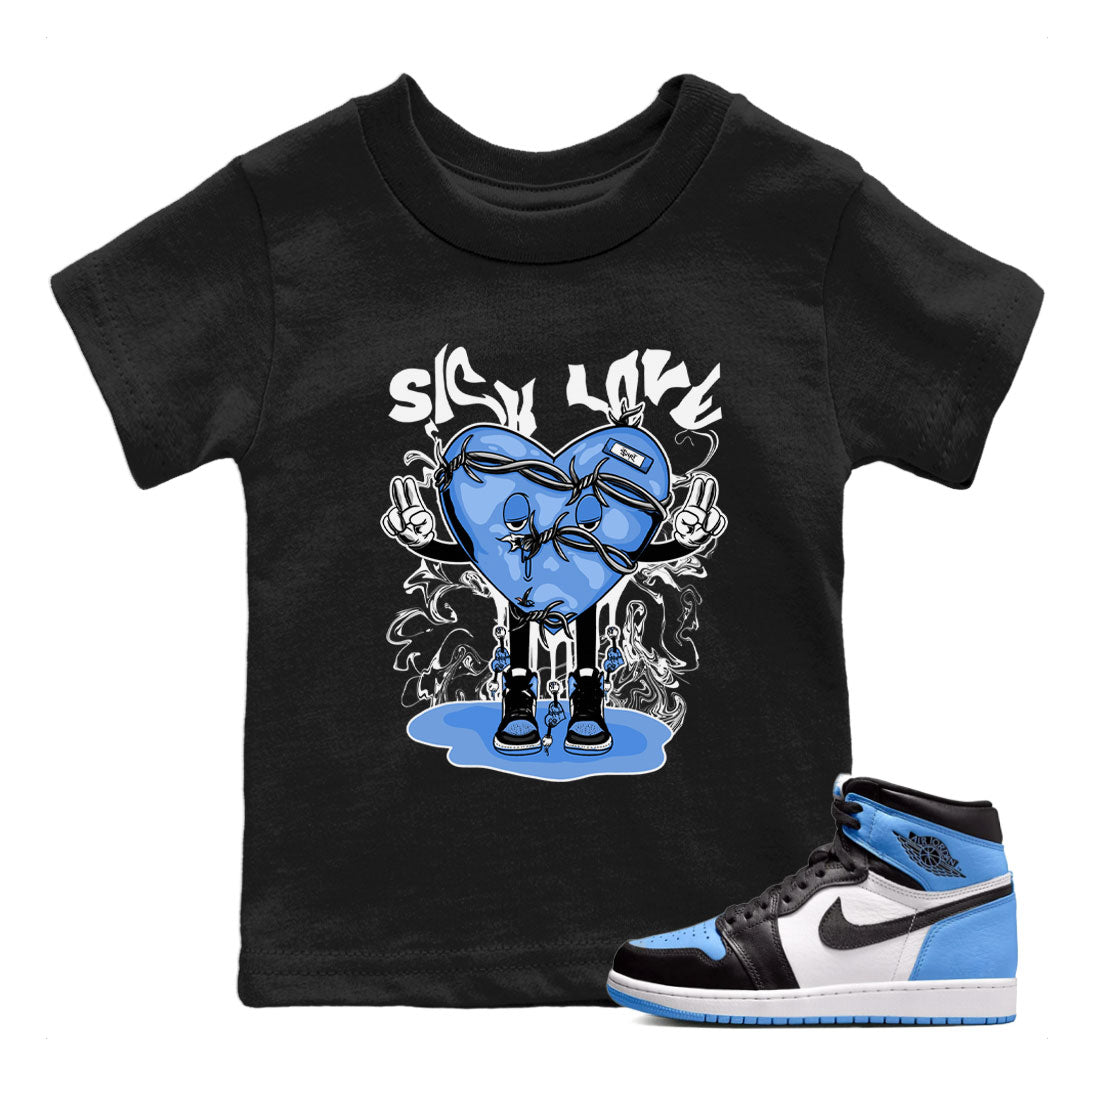 Air Jordan 1 UNC Toe shirt to match jordans Sick Love Streetwear Sneaker Shirt Air Jordan 1 Retro High OG UNC Toe Drip Gear Zone Sneaker Matching Clothing Baby Toddler Black 1 T-Shirt